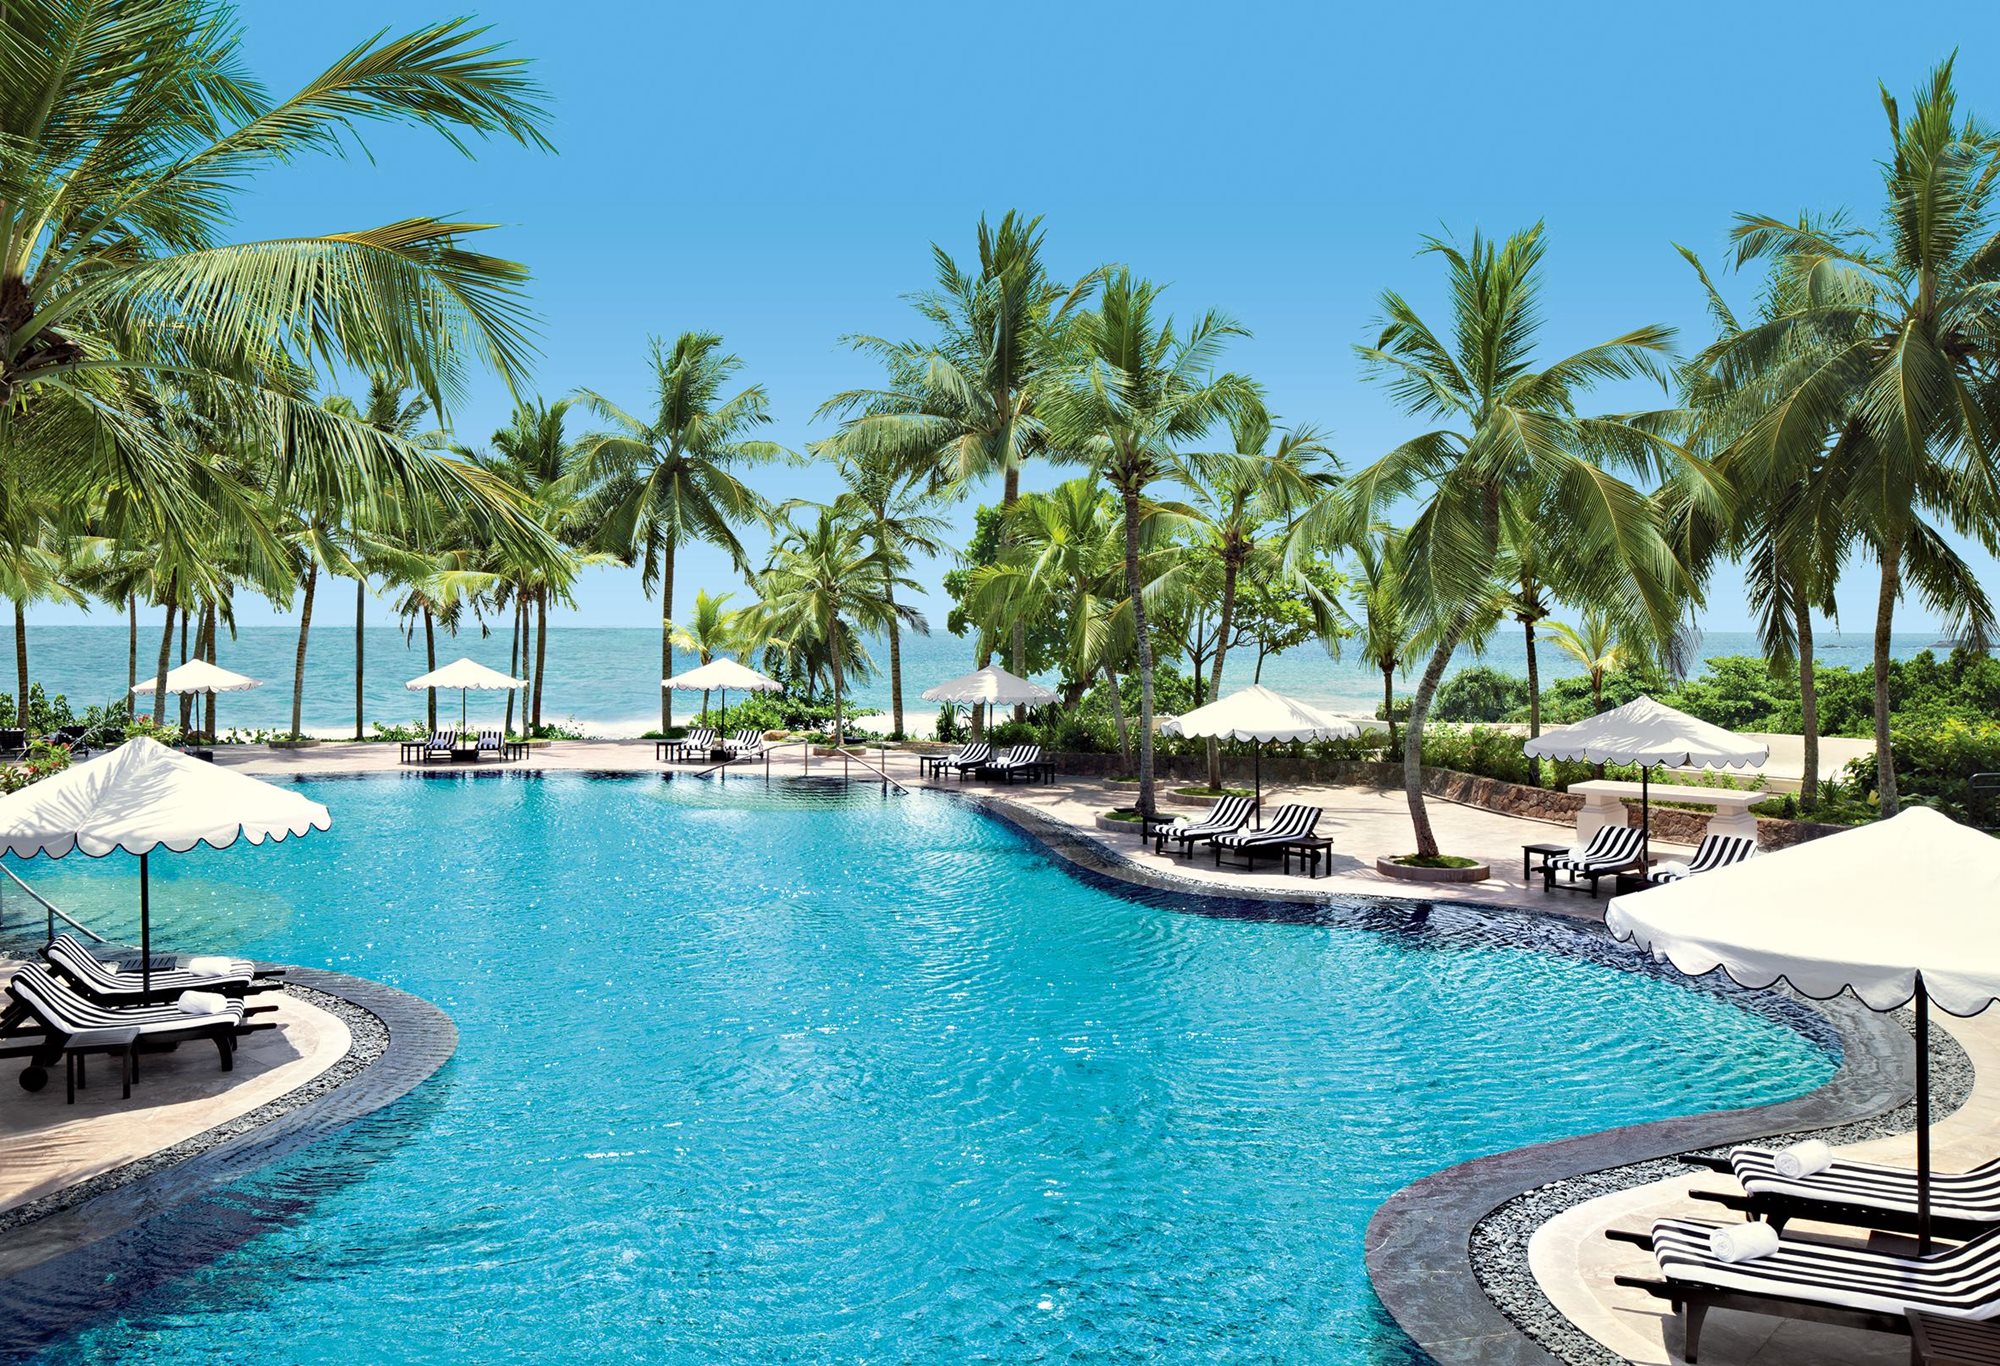 Beautiful 5 star hotel in Sri Lanka